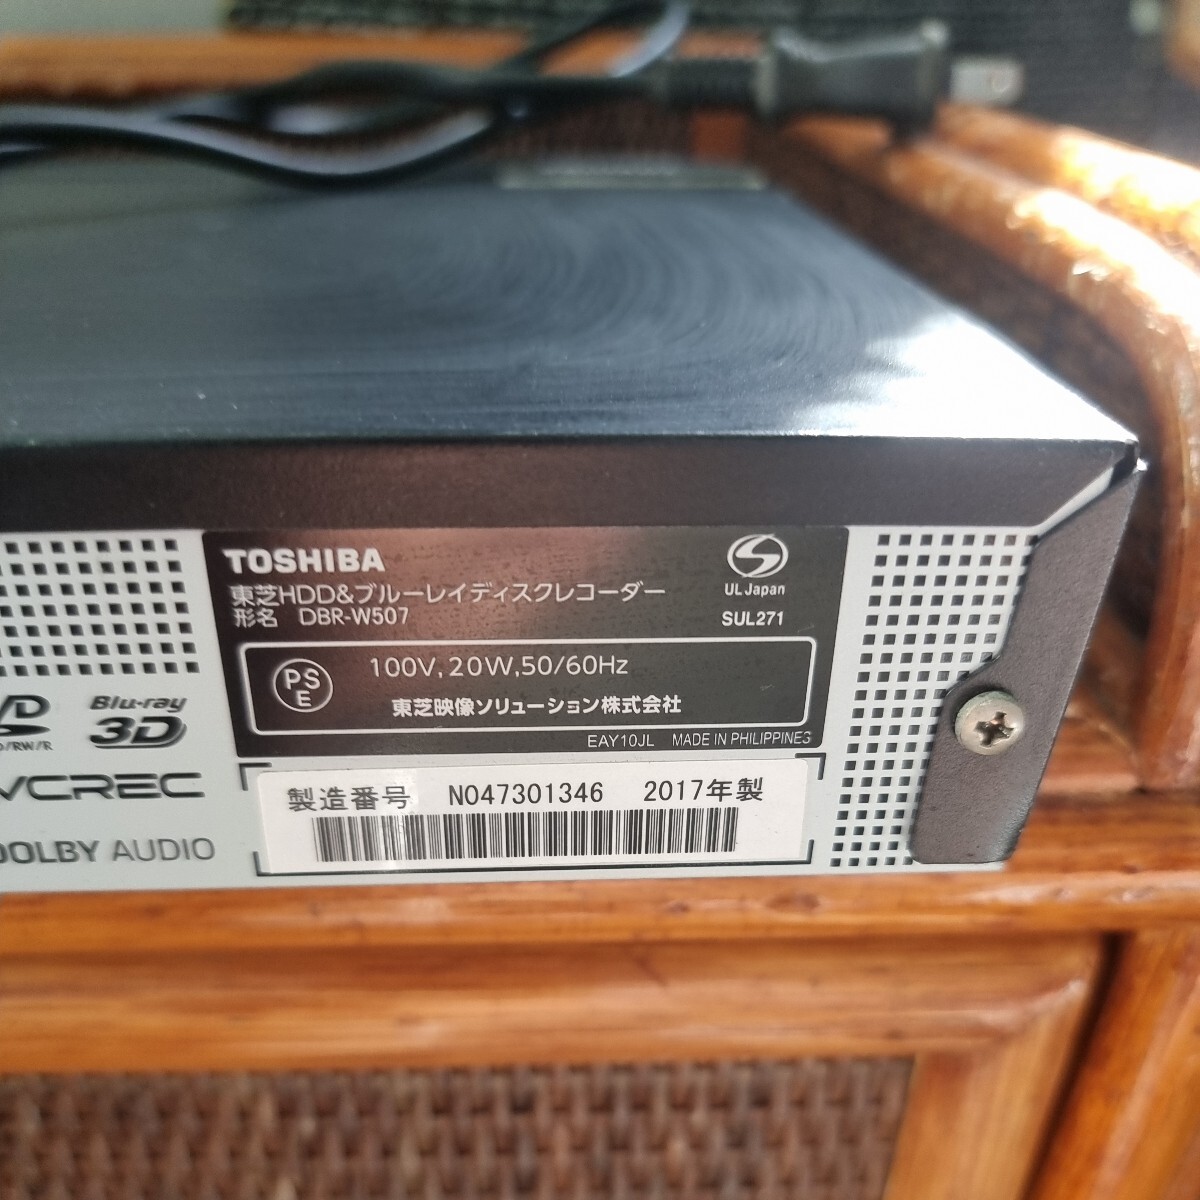 TOSHIBA REGZA DBR-W507 Blue-ray диск магнитофон 17 год производства электризация проверка б/у текущее состояние 